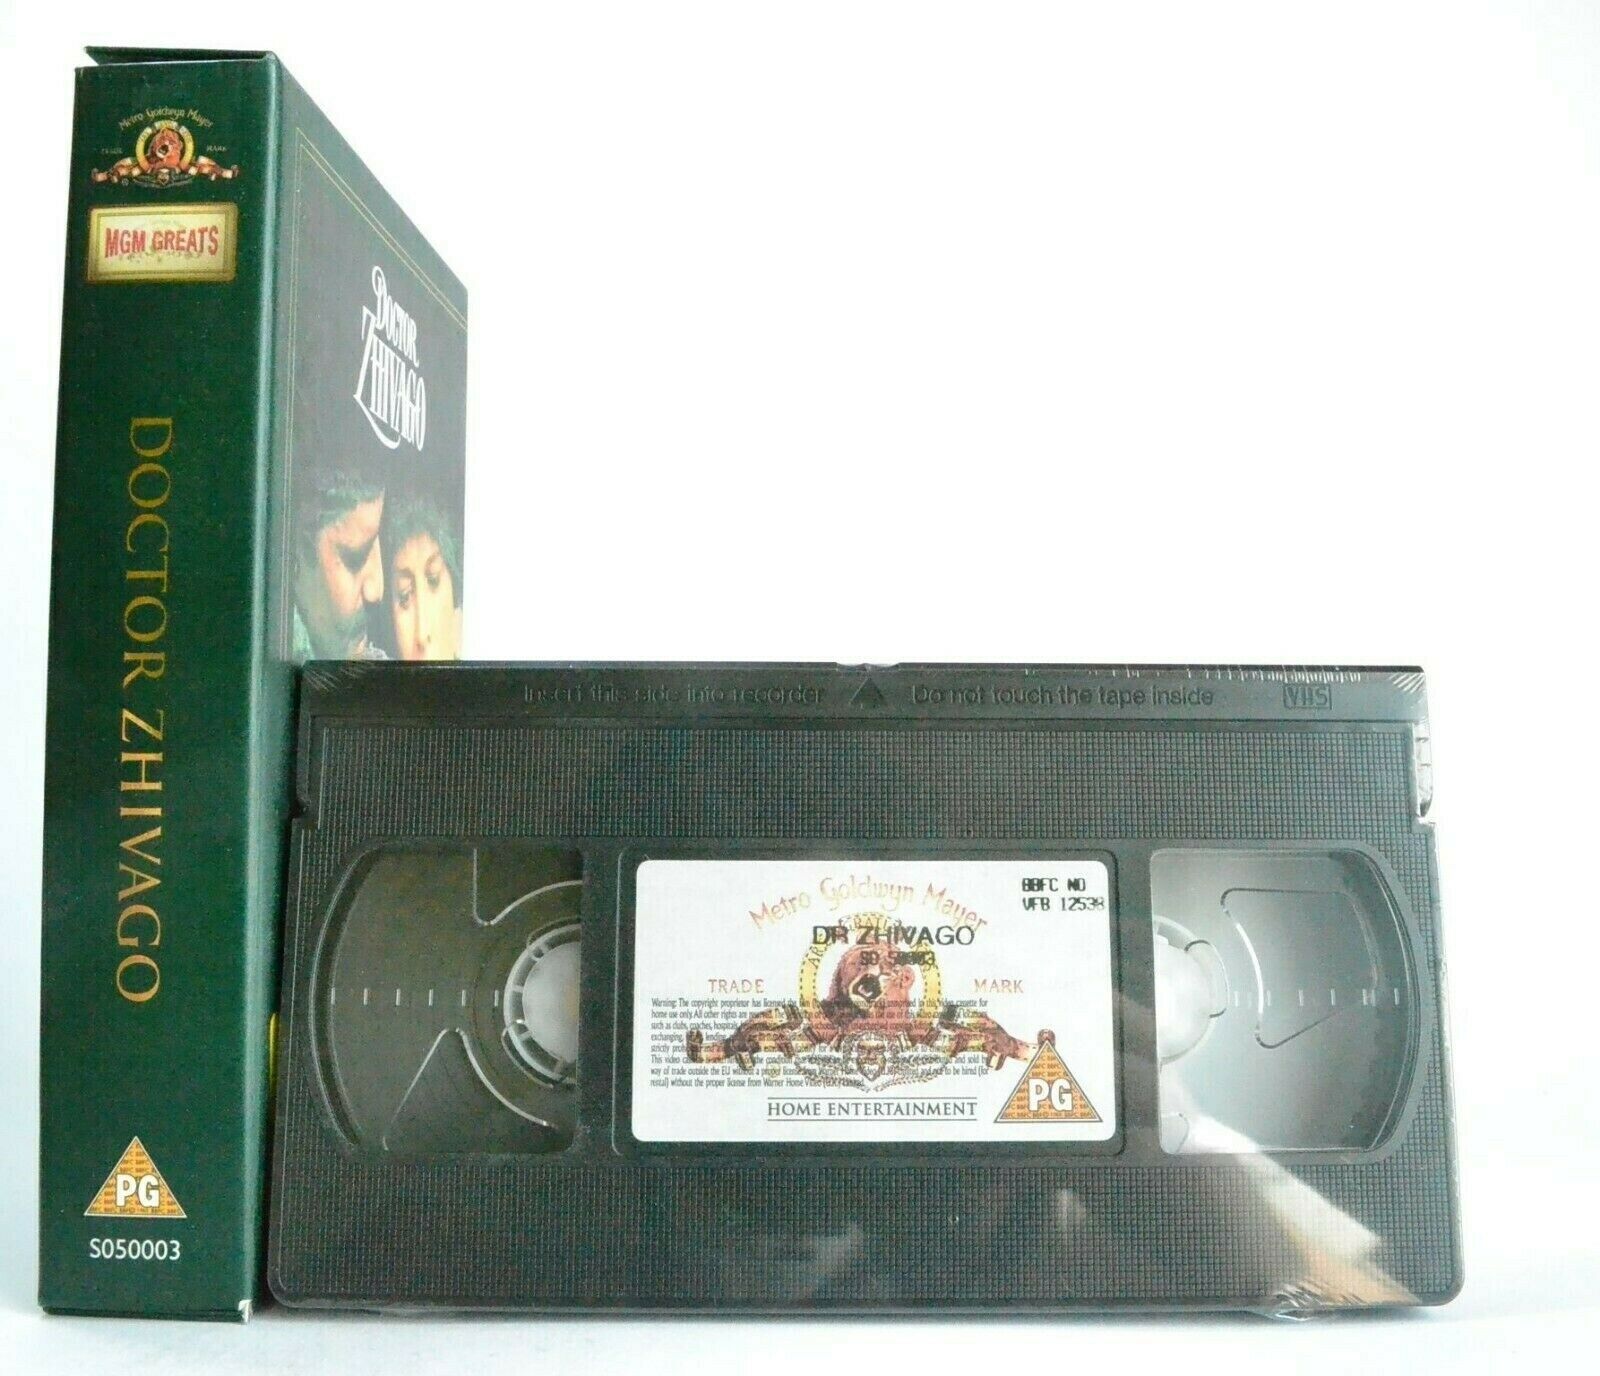 Doctor Zhivago: Historical Drama (1965) - Brand New Sealed - Omar Sharif - VHS-